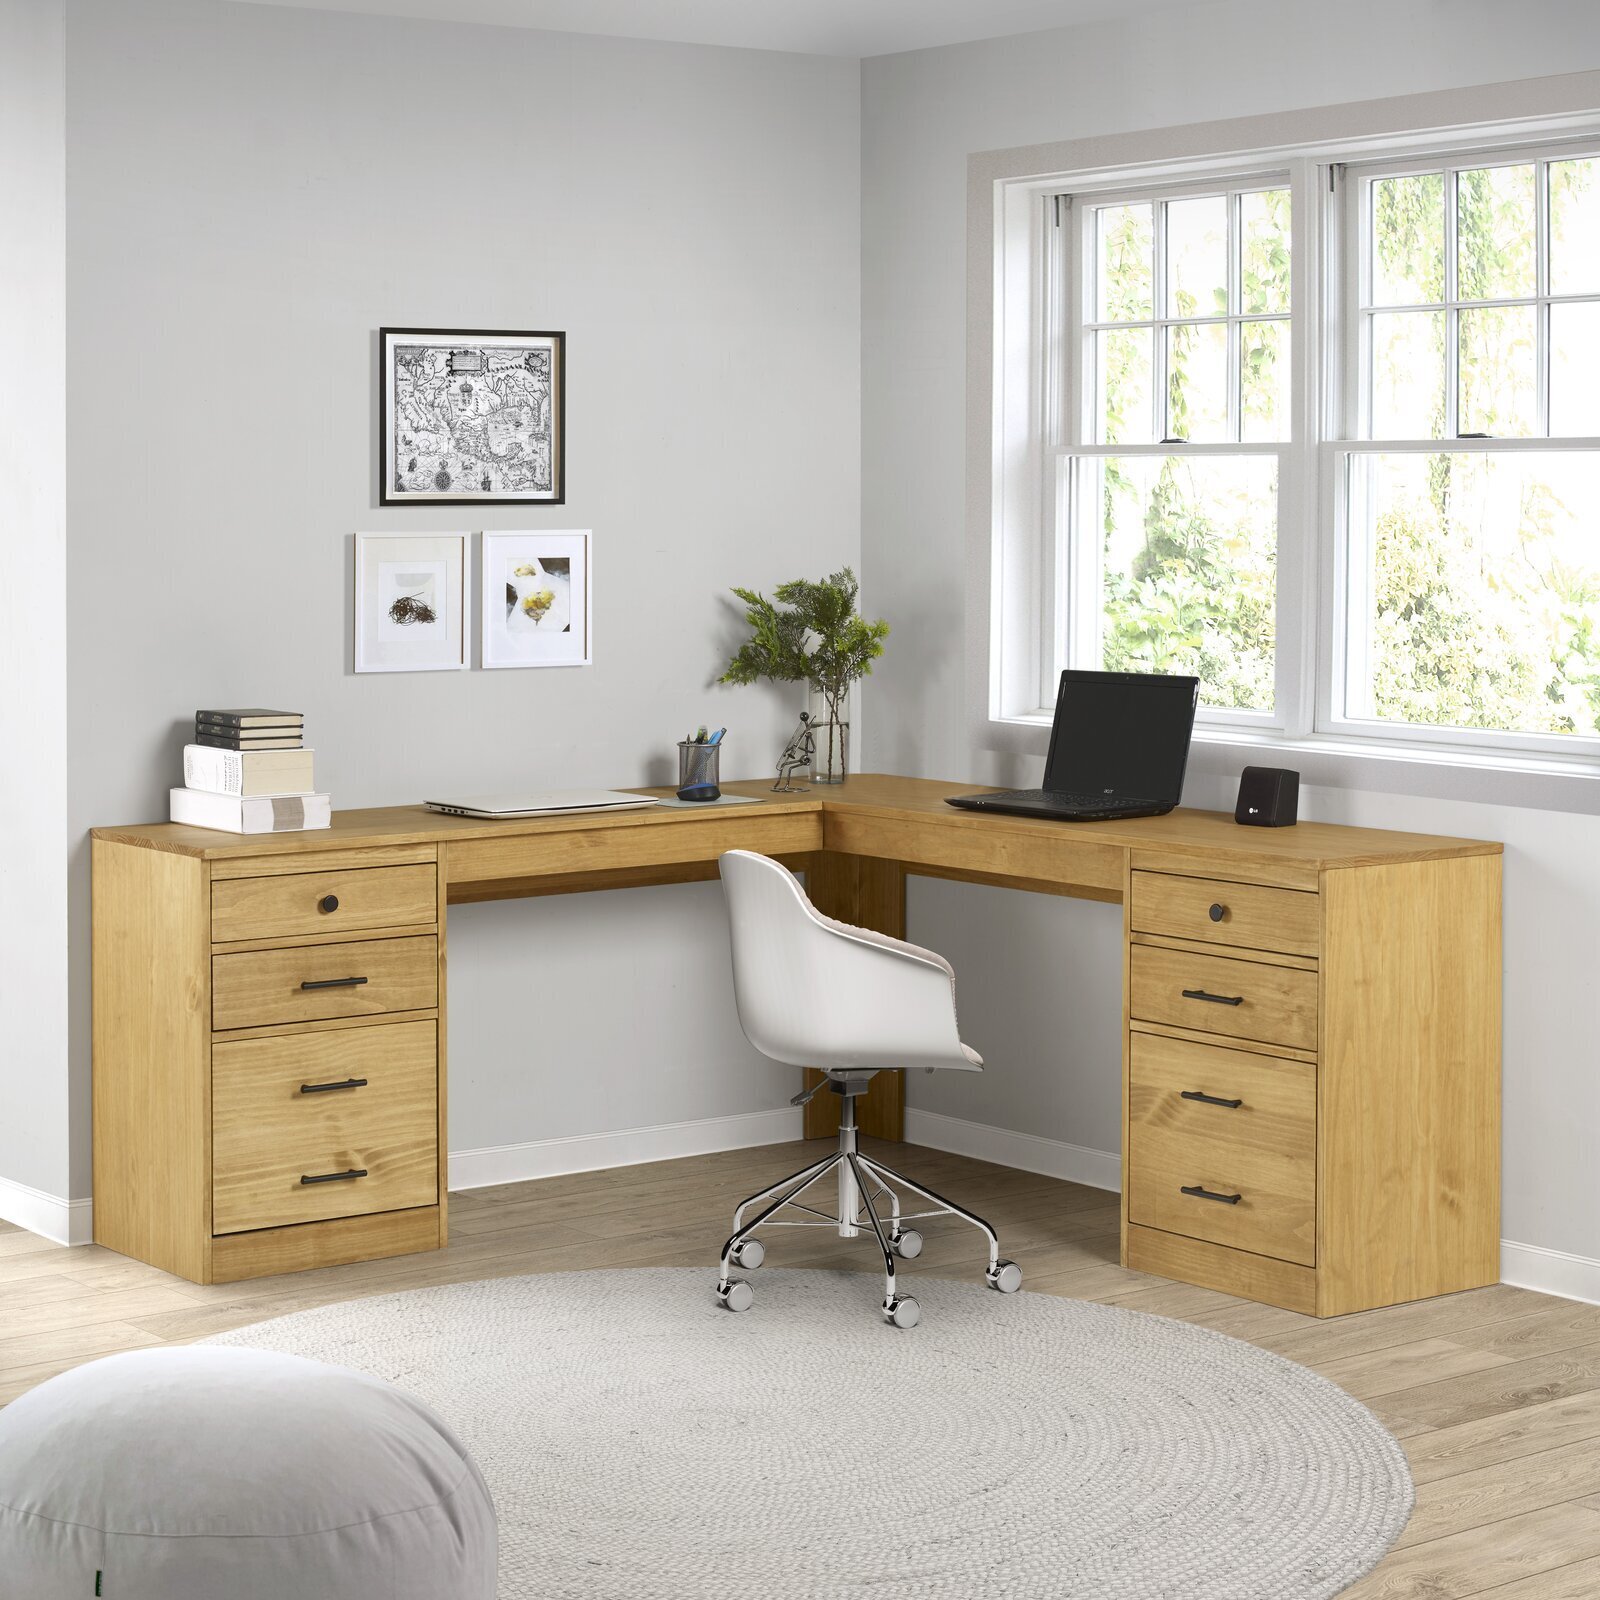 L shaped maple brown wooden office desk